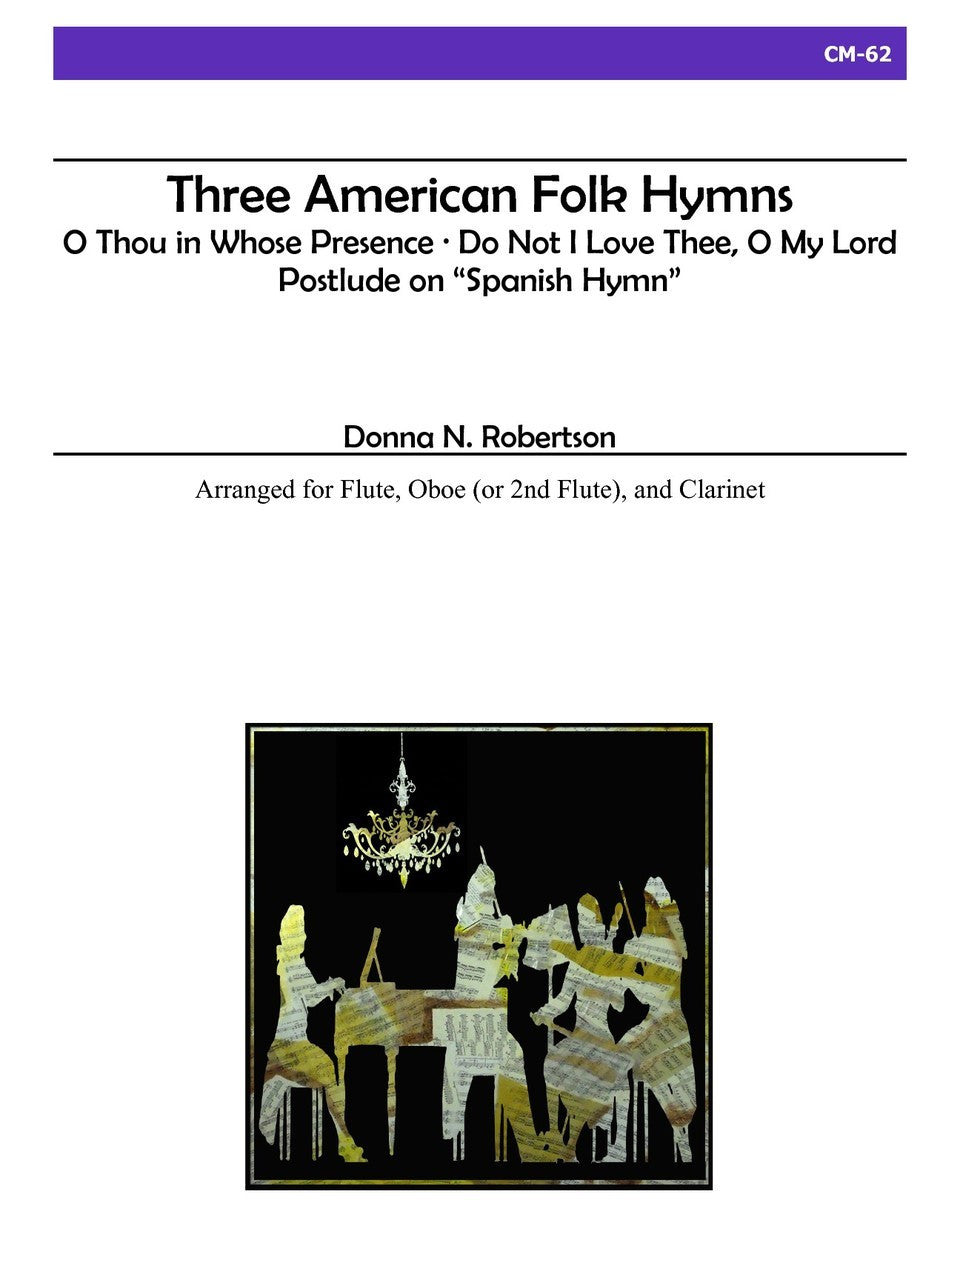 Robertson - Three American Folk Hymns